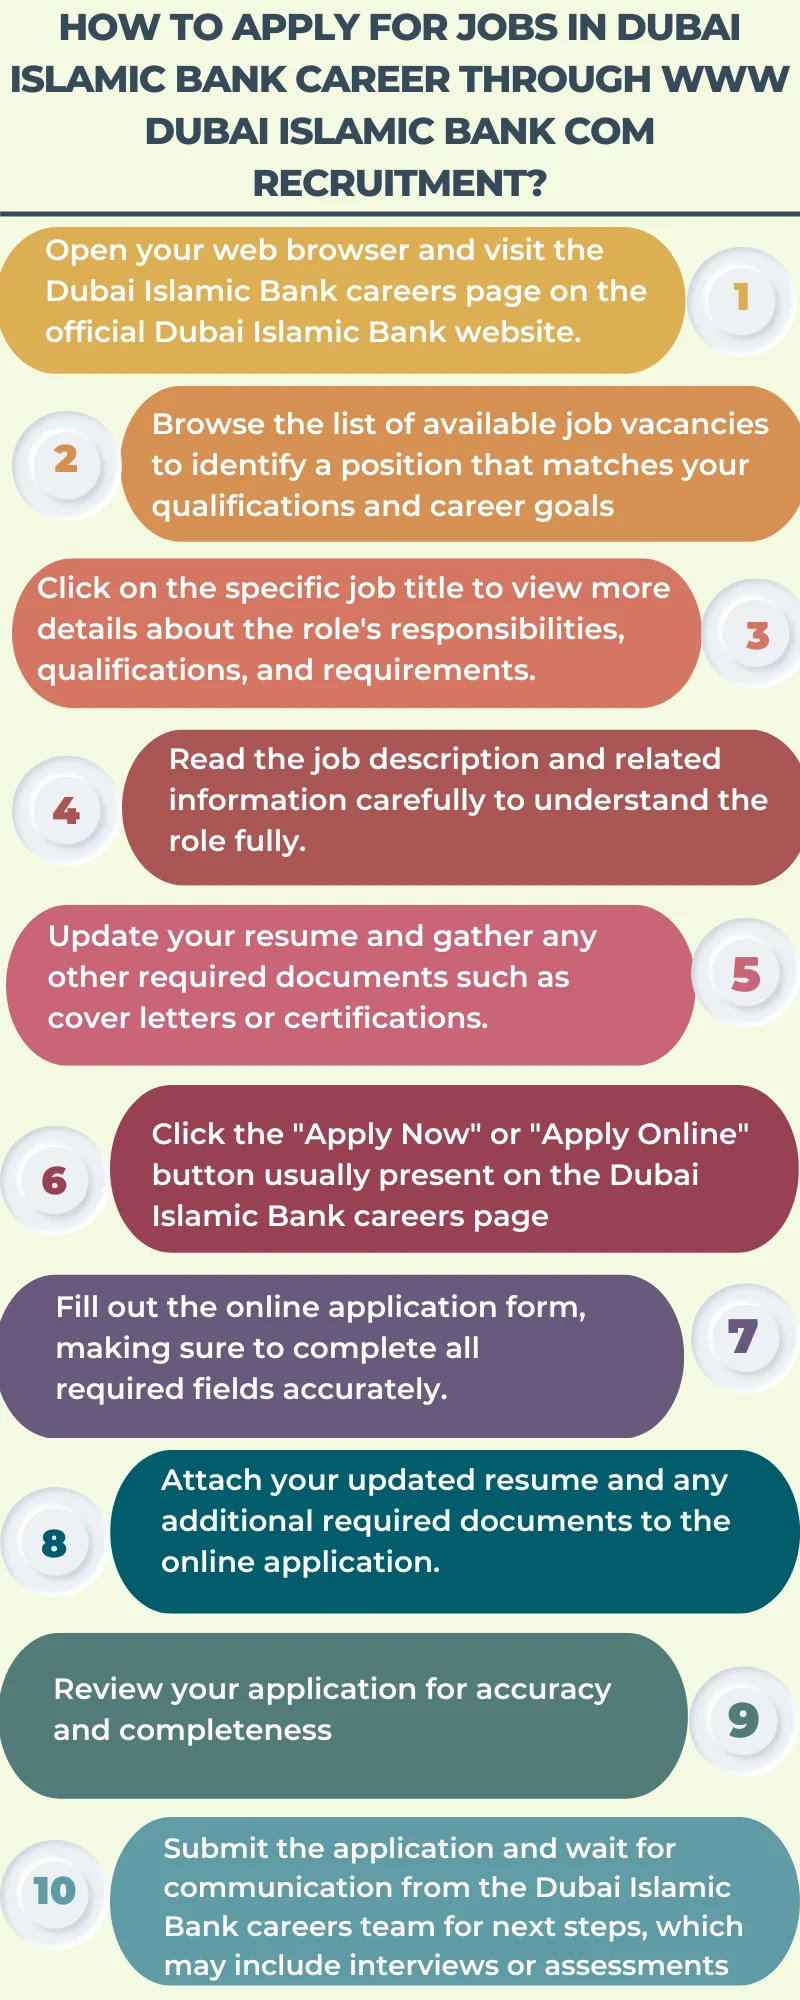 How to Apply for Jobs in Dubai Islamic Bank Career through www Dubai Islamic Bank com recruitment?